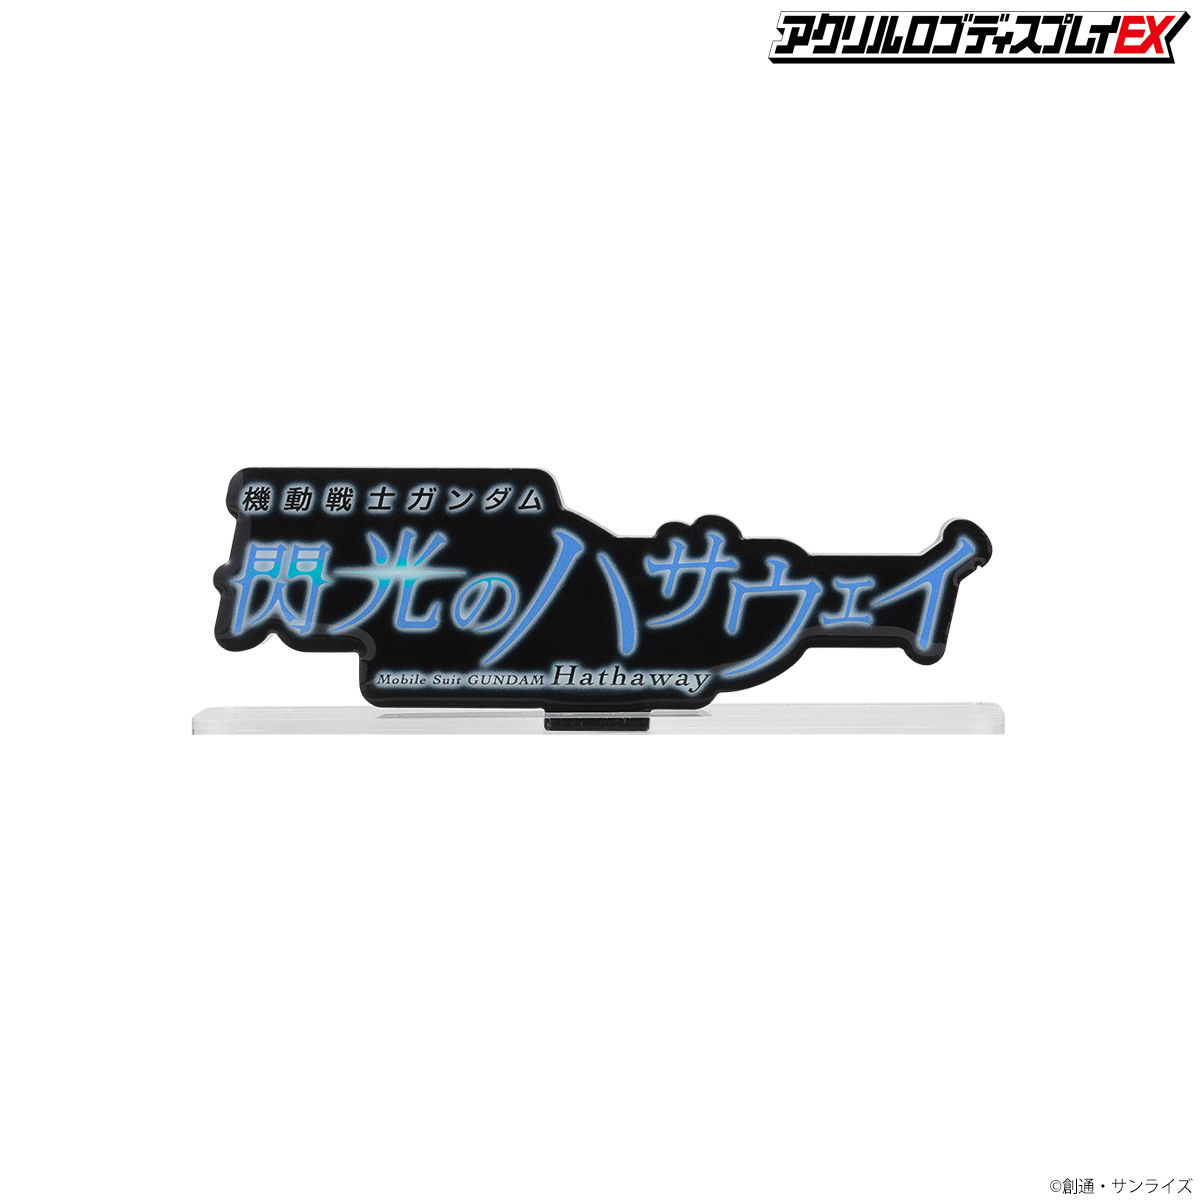 Acrylic Logo Diplay EX-Mobile Suit Gundam: Hathaway's Flash